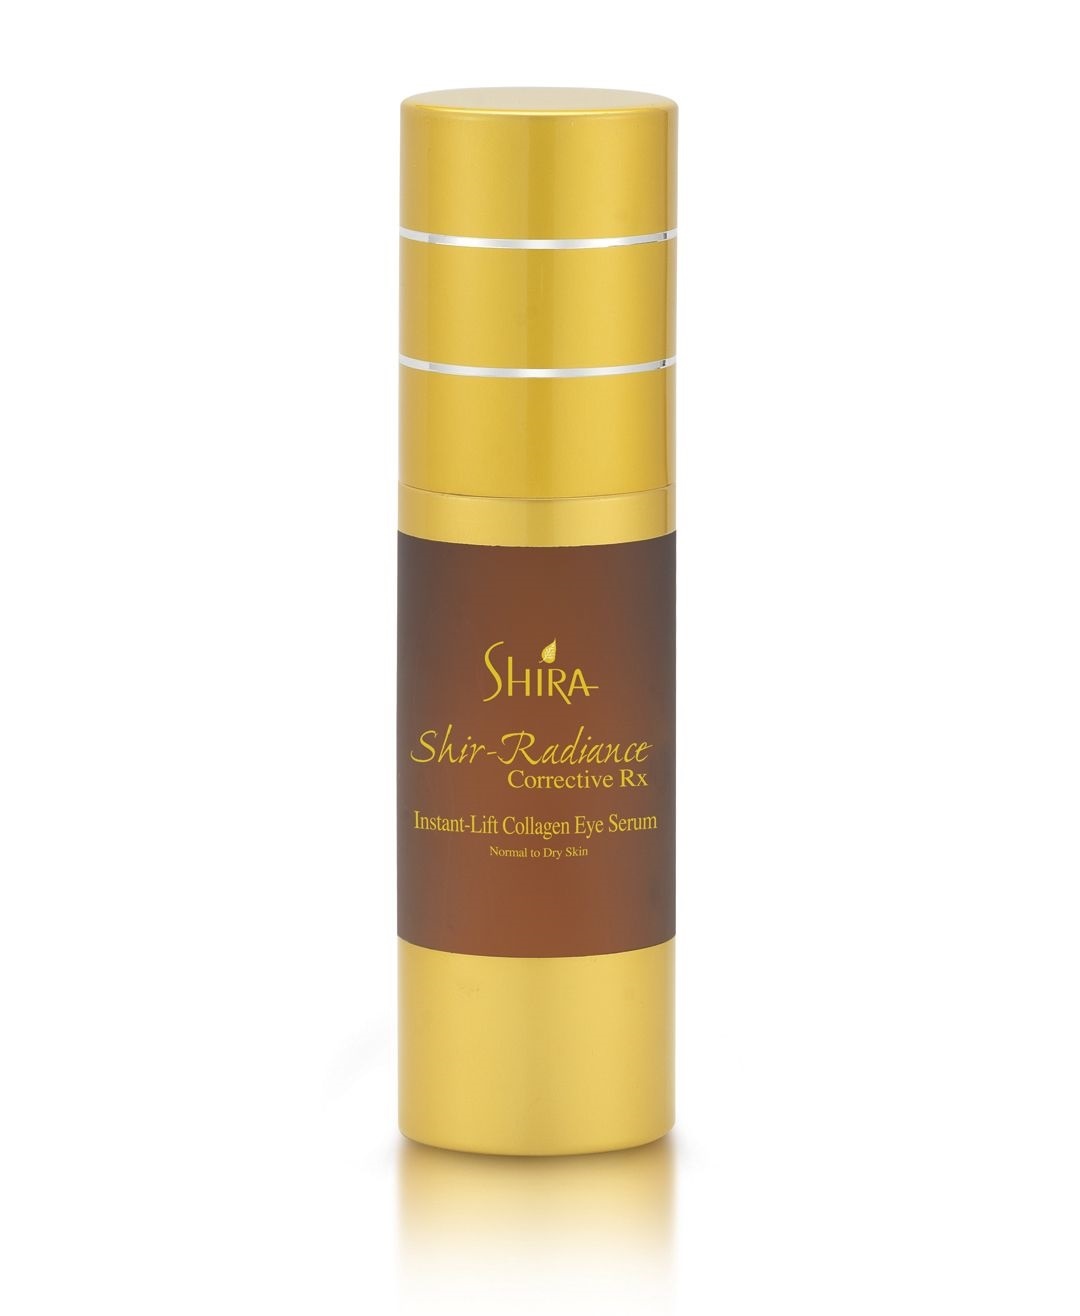 Shira Shir-Radiance Corrective RX Instant-Lift Collagen Eye Serum